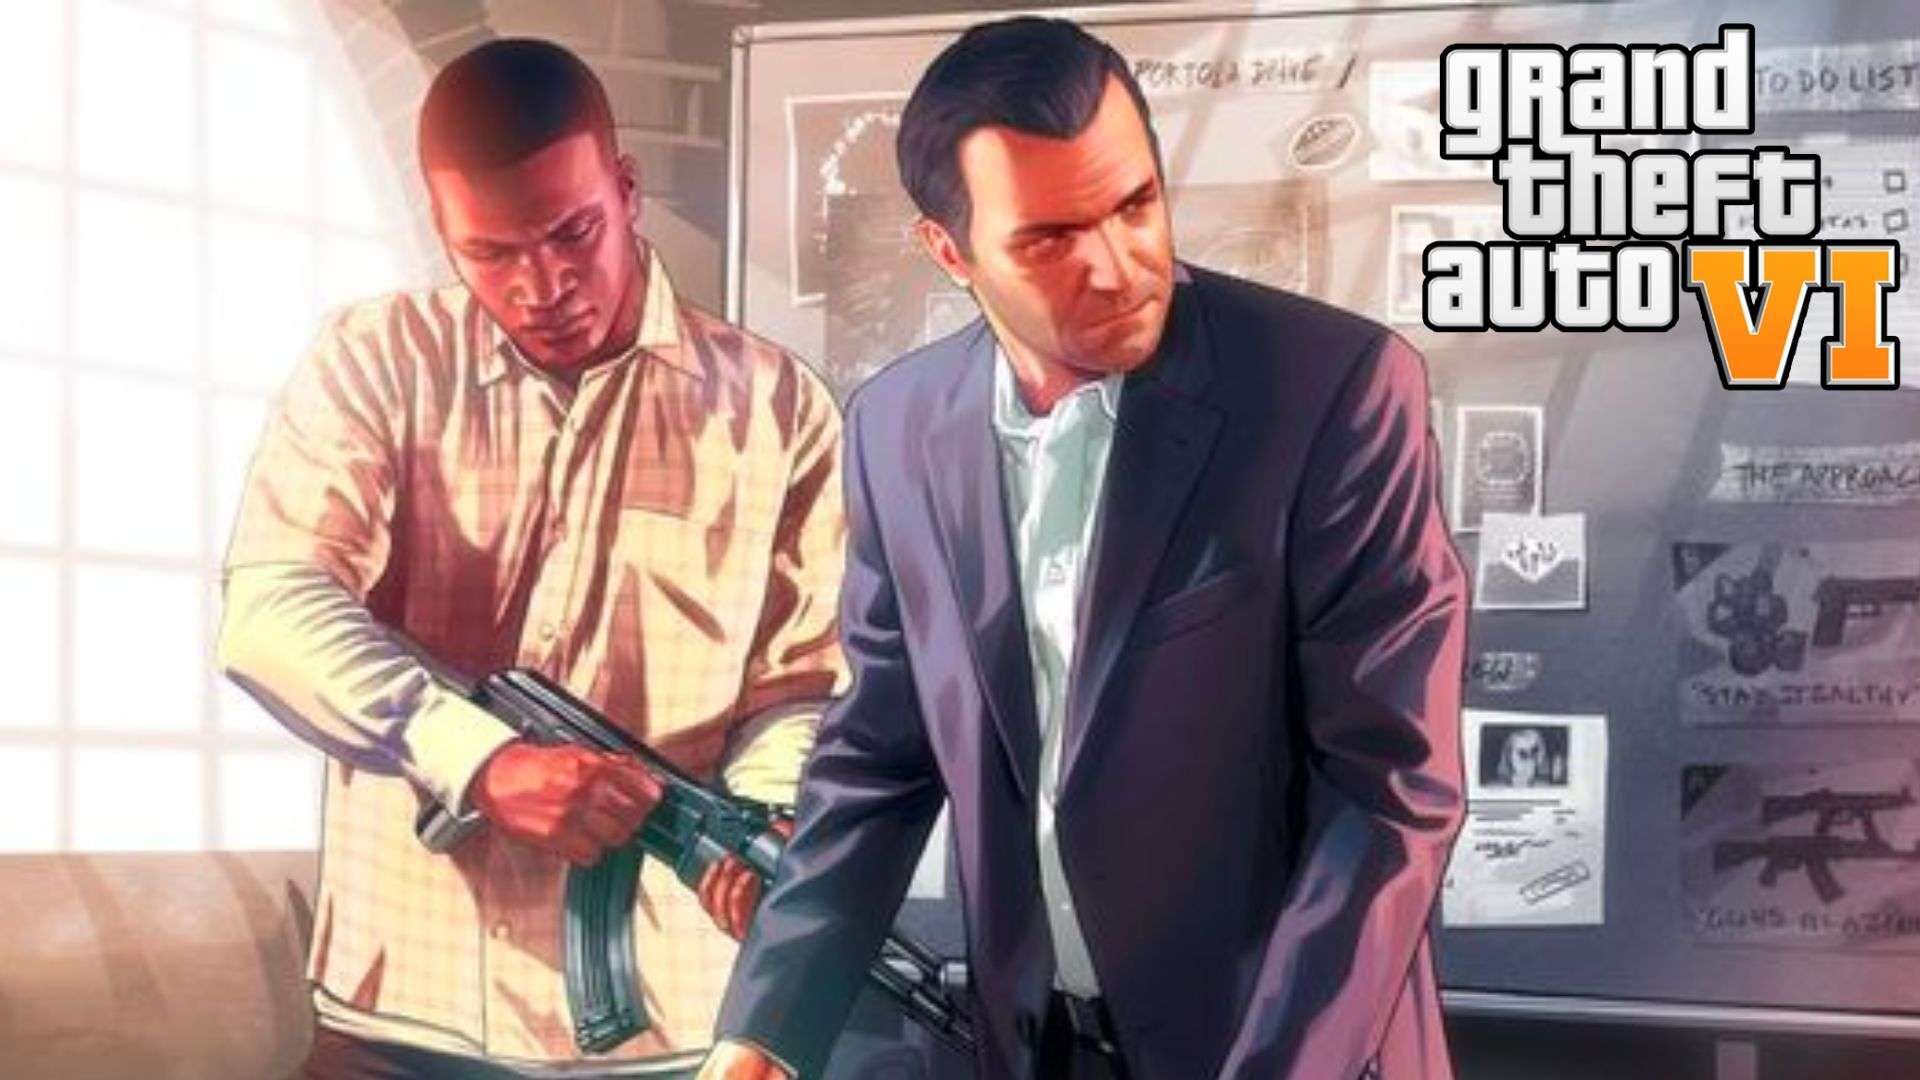 Michael and Franklin in GTA 5 screenshot with GTA 6 logo